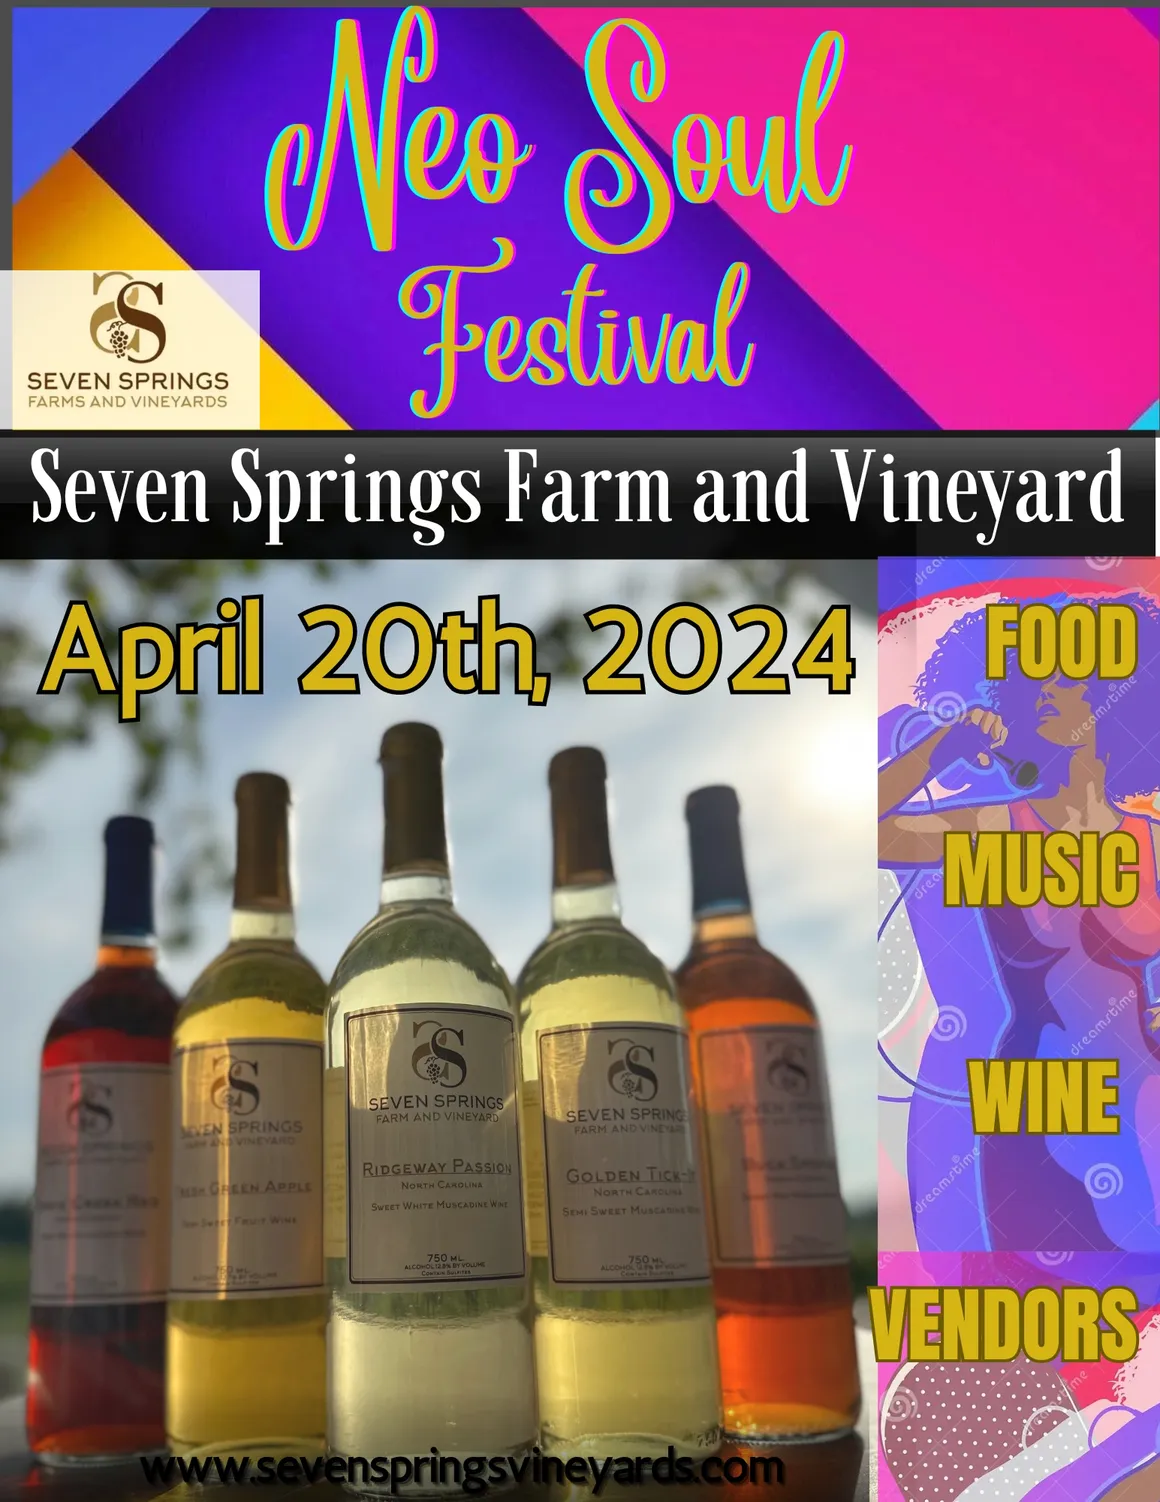 neosoul festival seven springs farm and vineyard april 20 2024